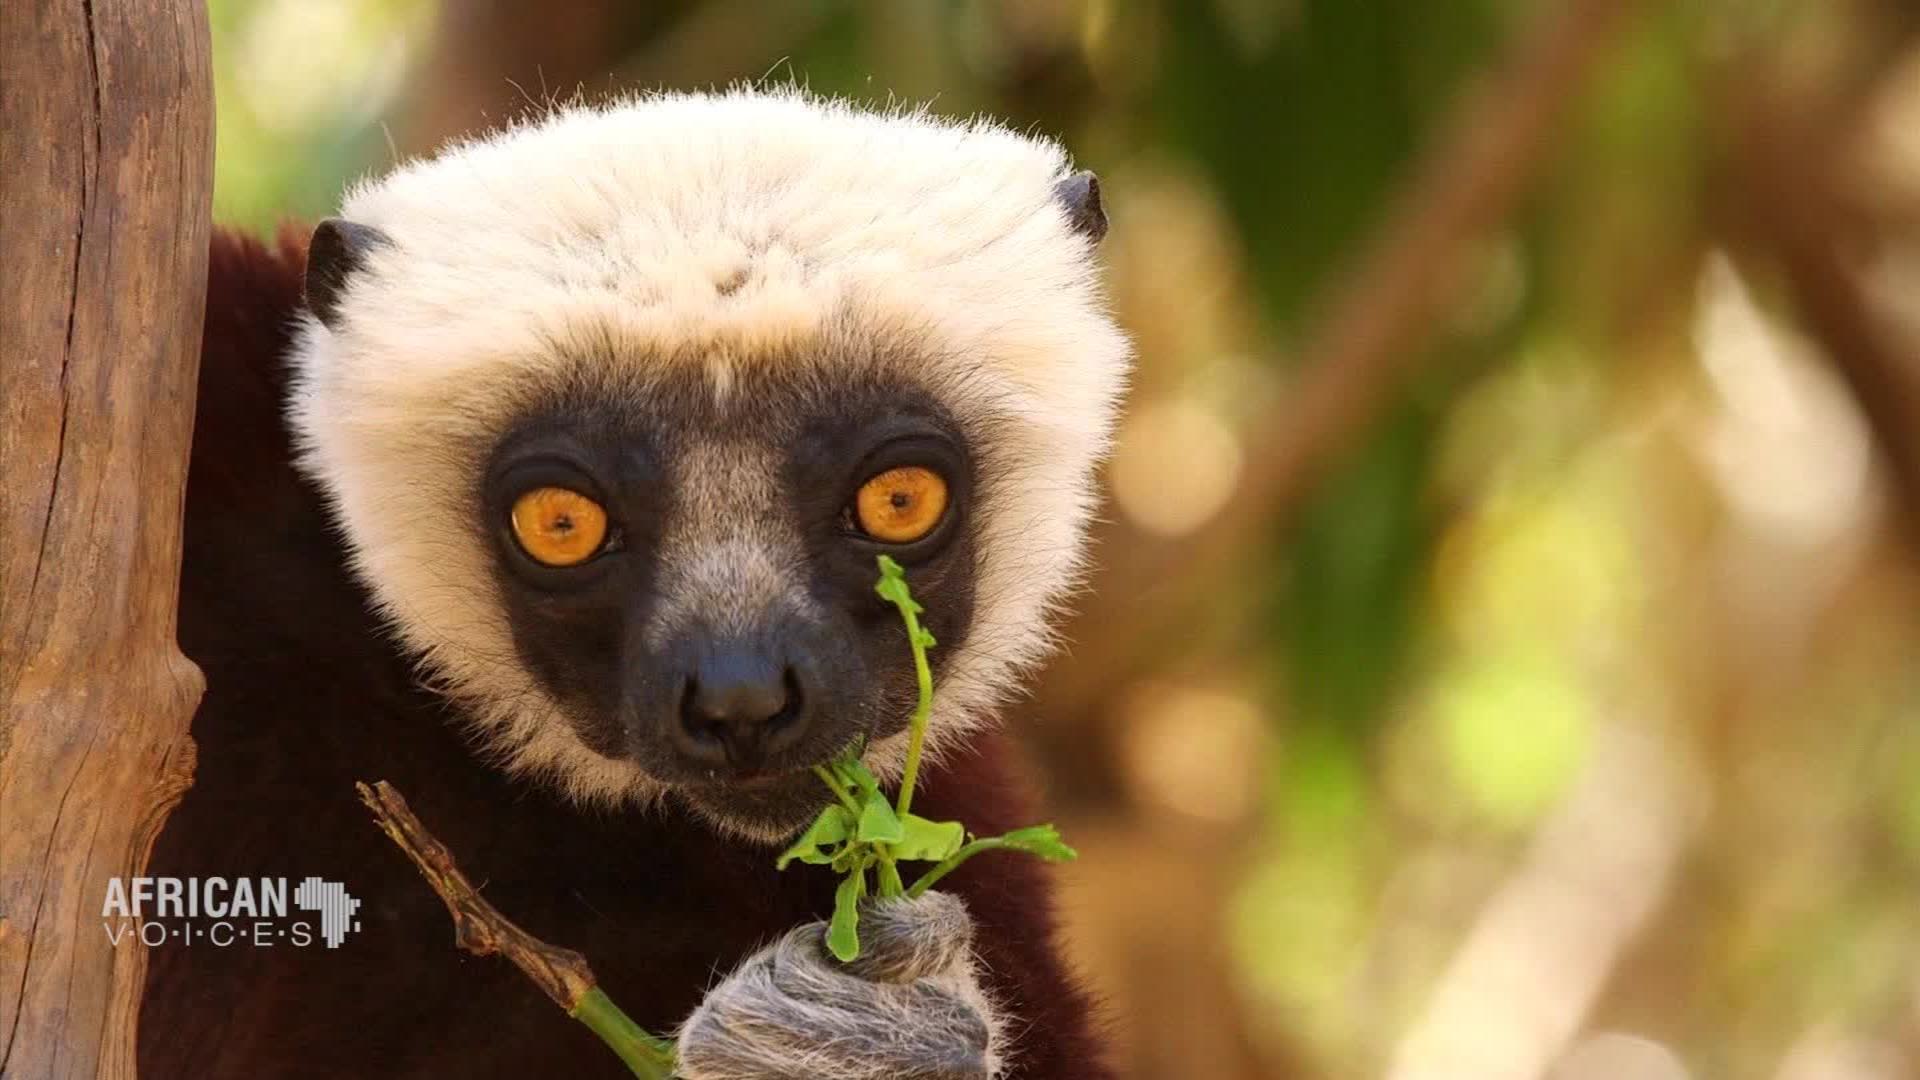 Can Madagascar's endangered lemurs be saved? | CNN